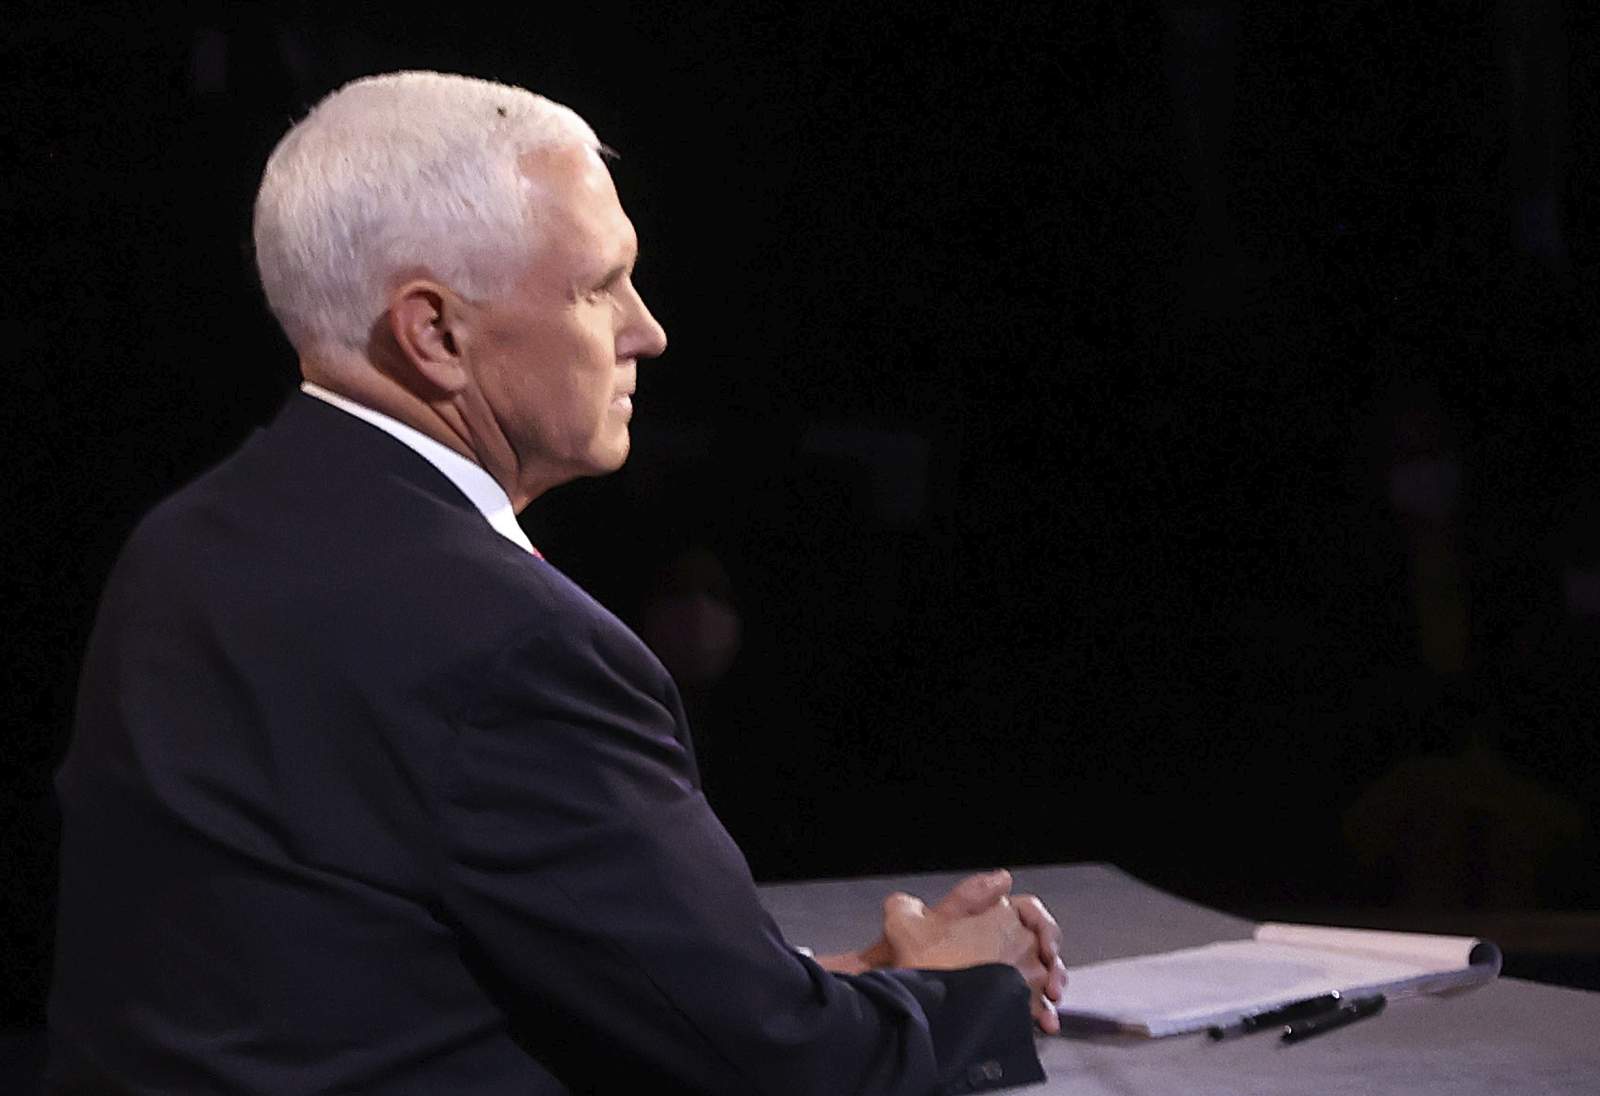 Fly on Pence's head generates buzz in VP debate